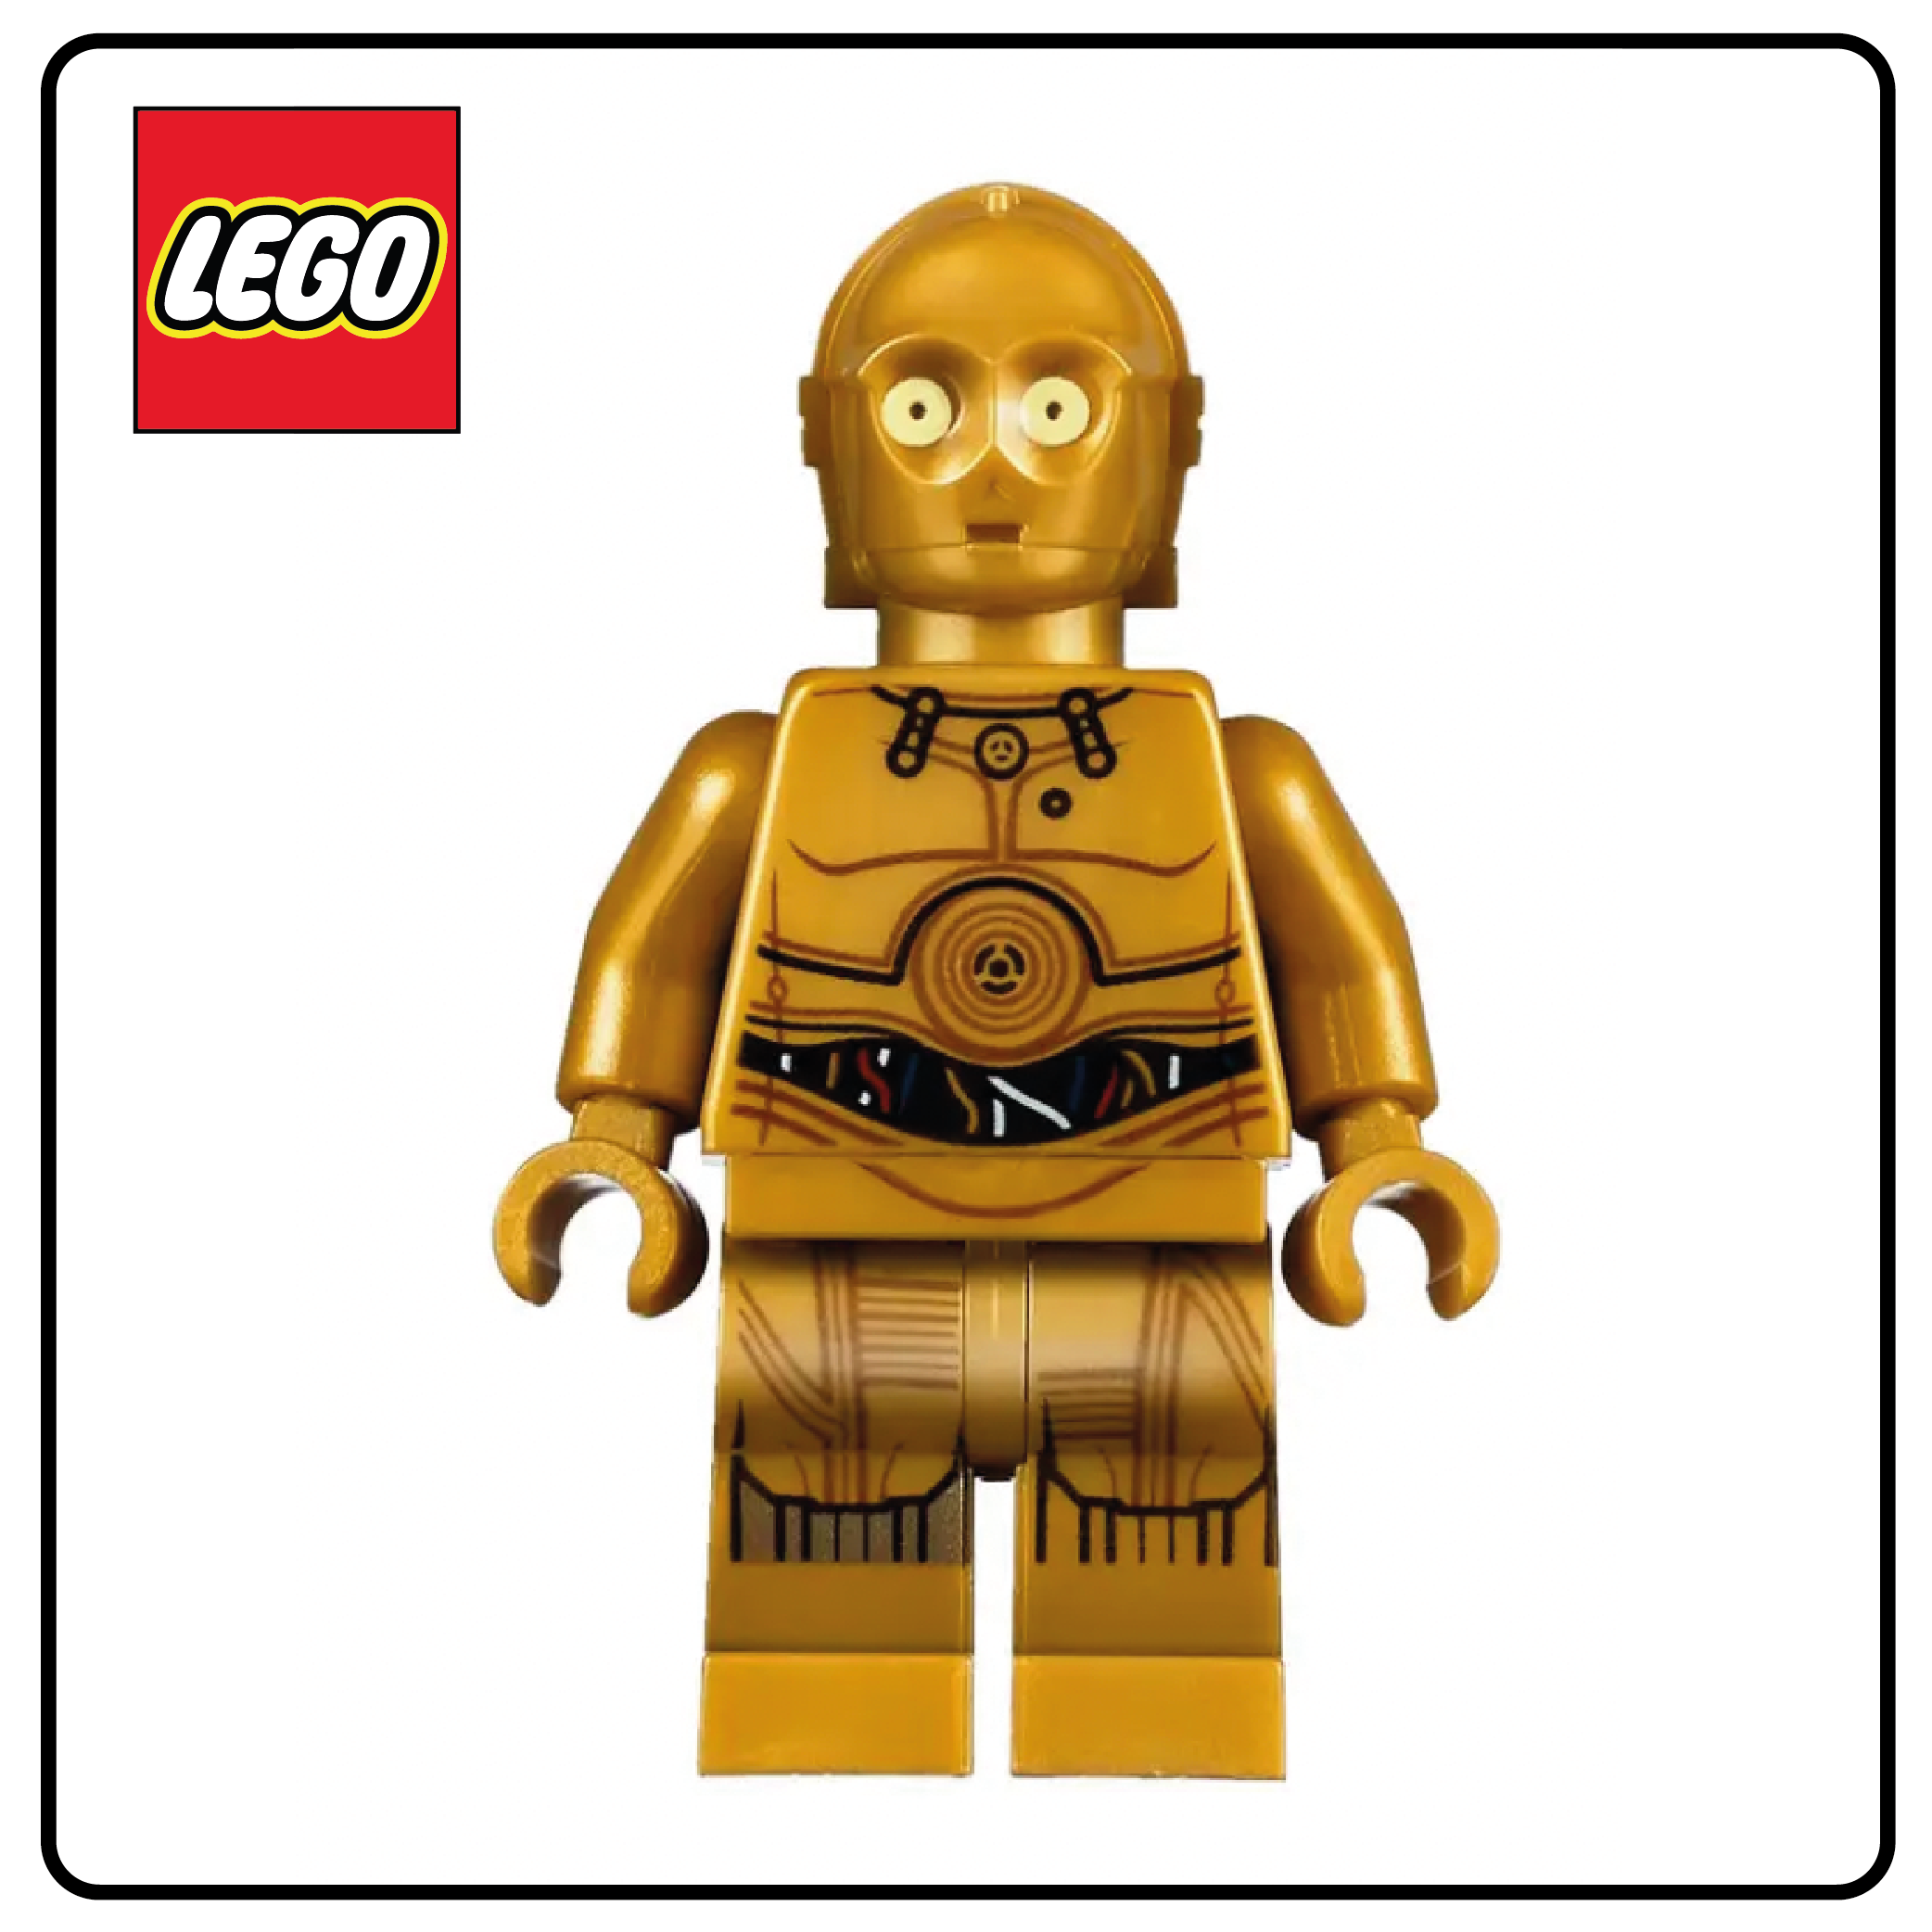 LEGO® Star Wars Minifigure - C-3PO 2016